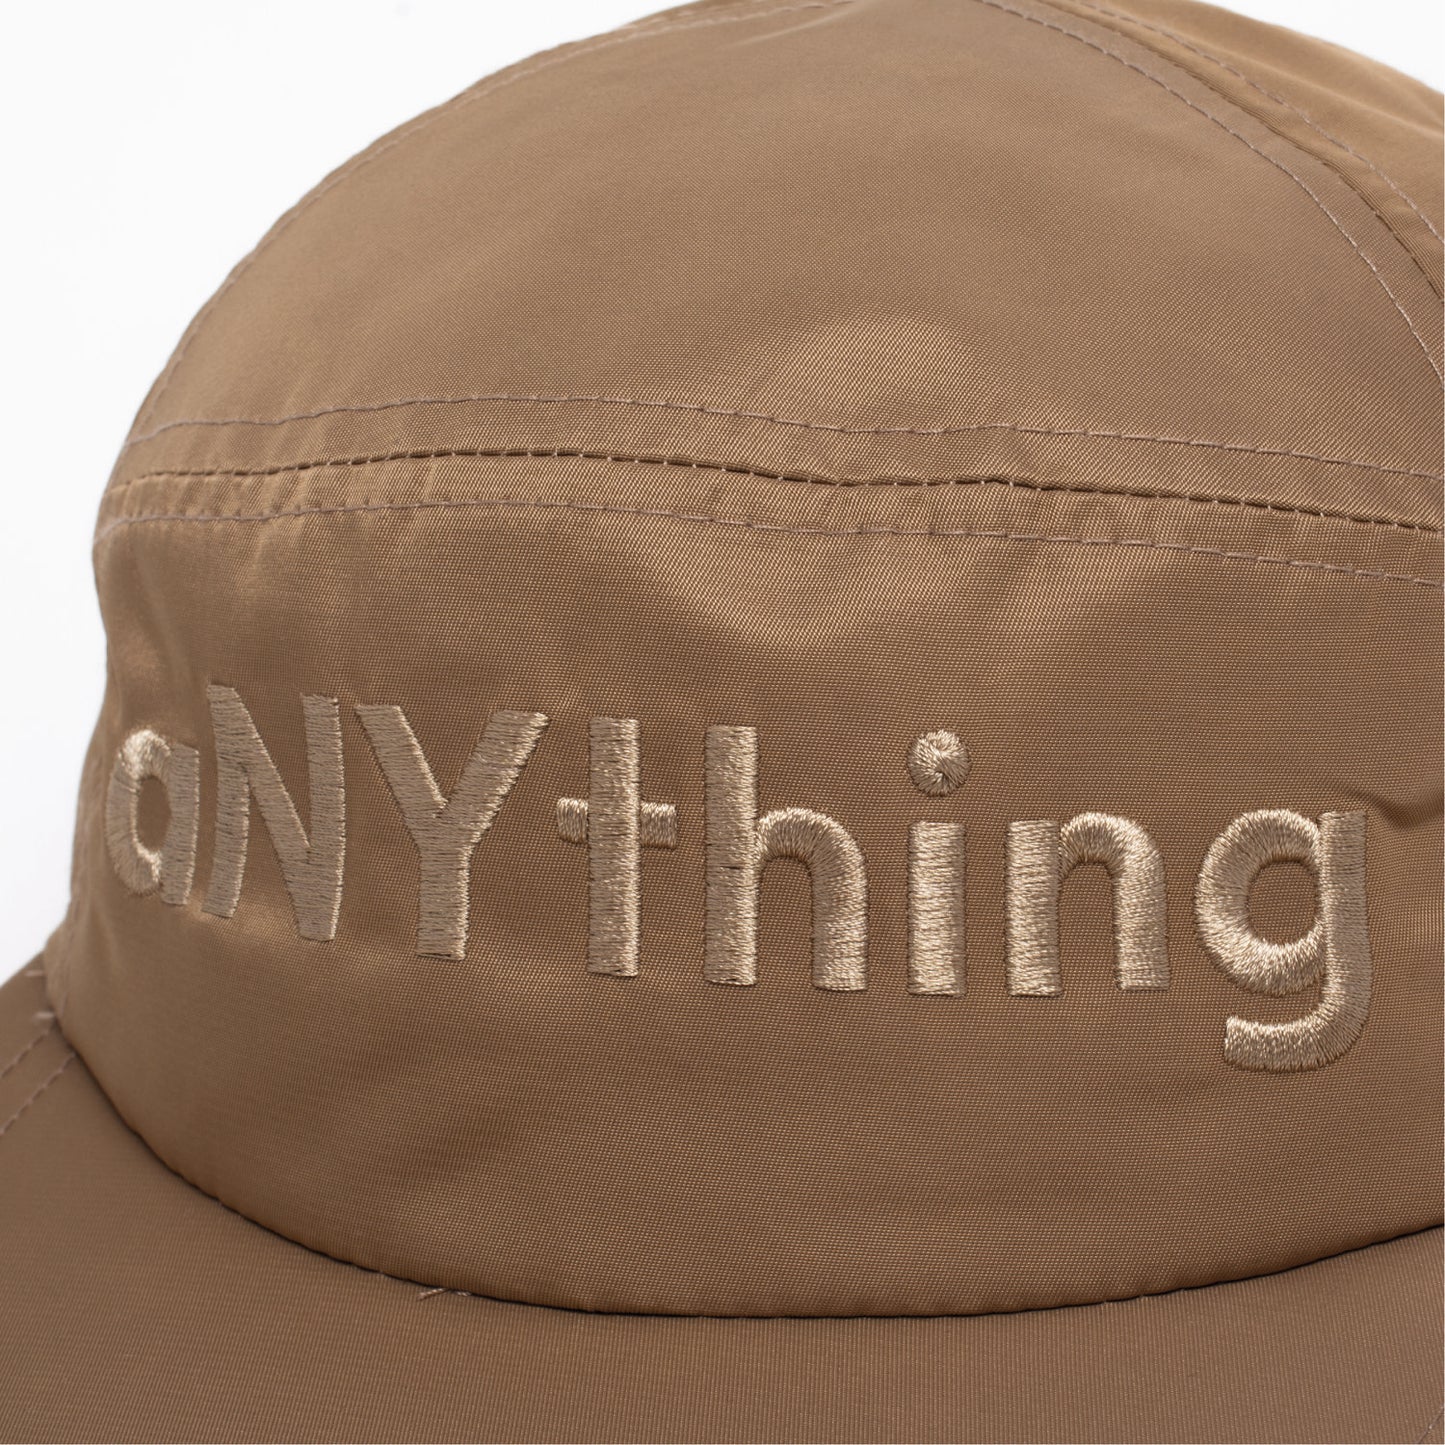 aNYthing 6 Panel Nylon Cap - Khaki